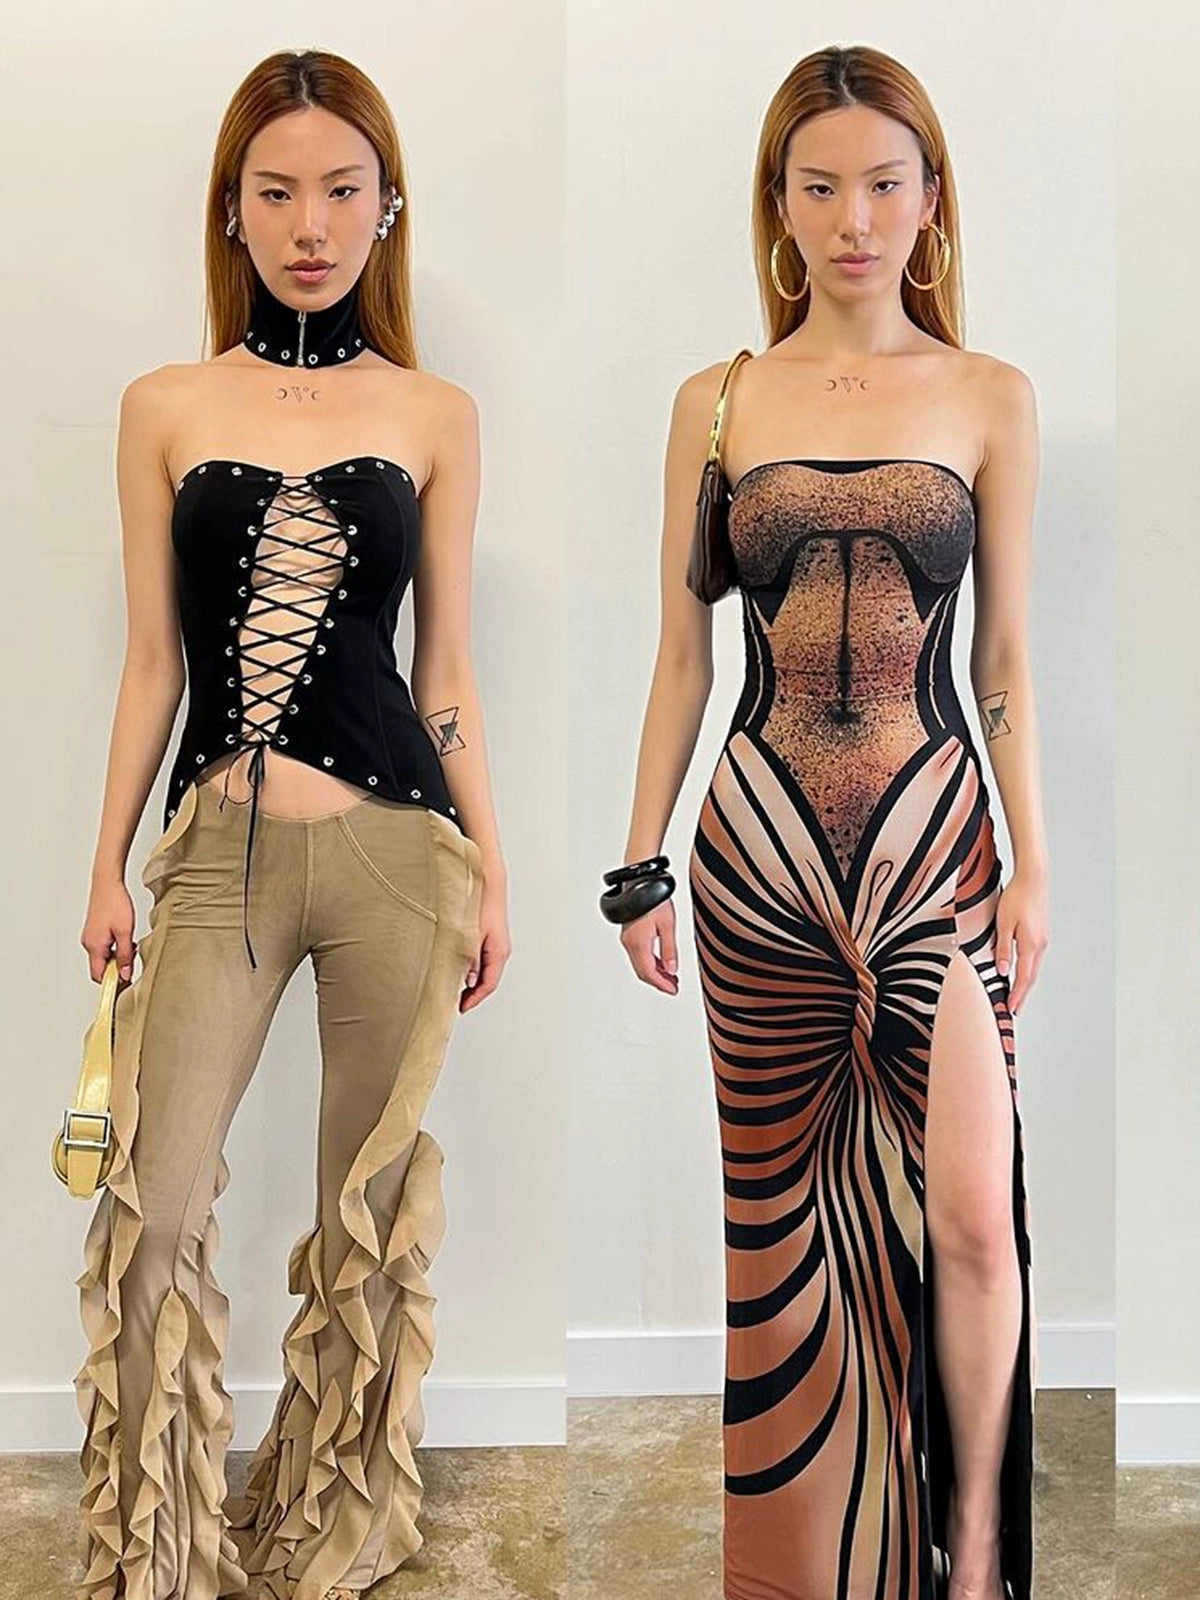 KKX Tube Top Dress: Street Style Fashion with Figure-Flattering High Slit